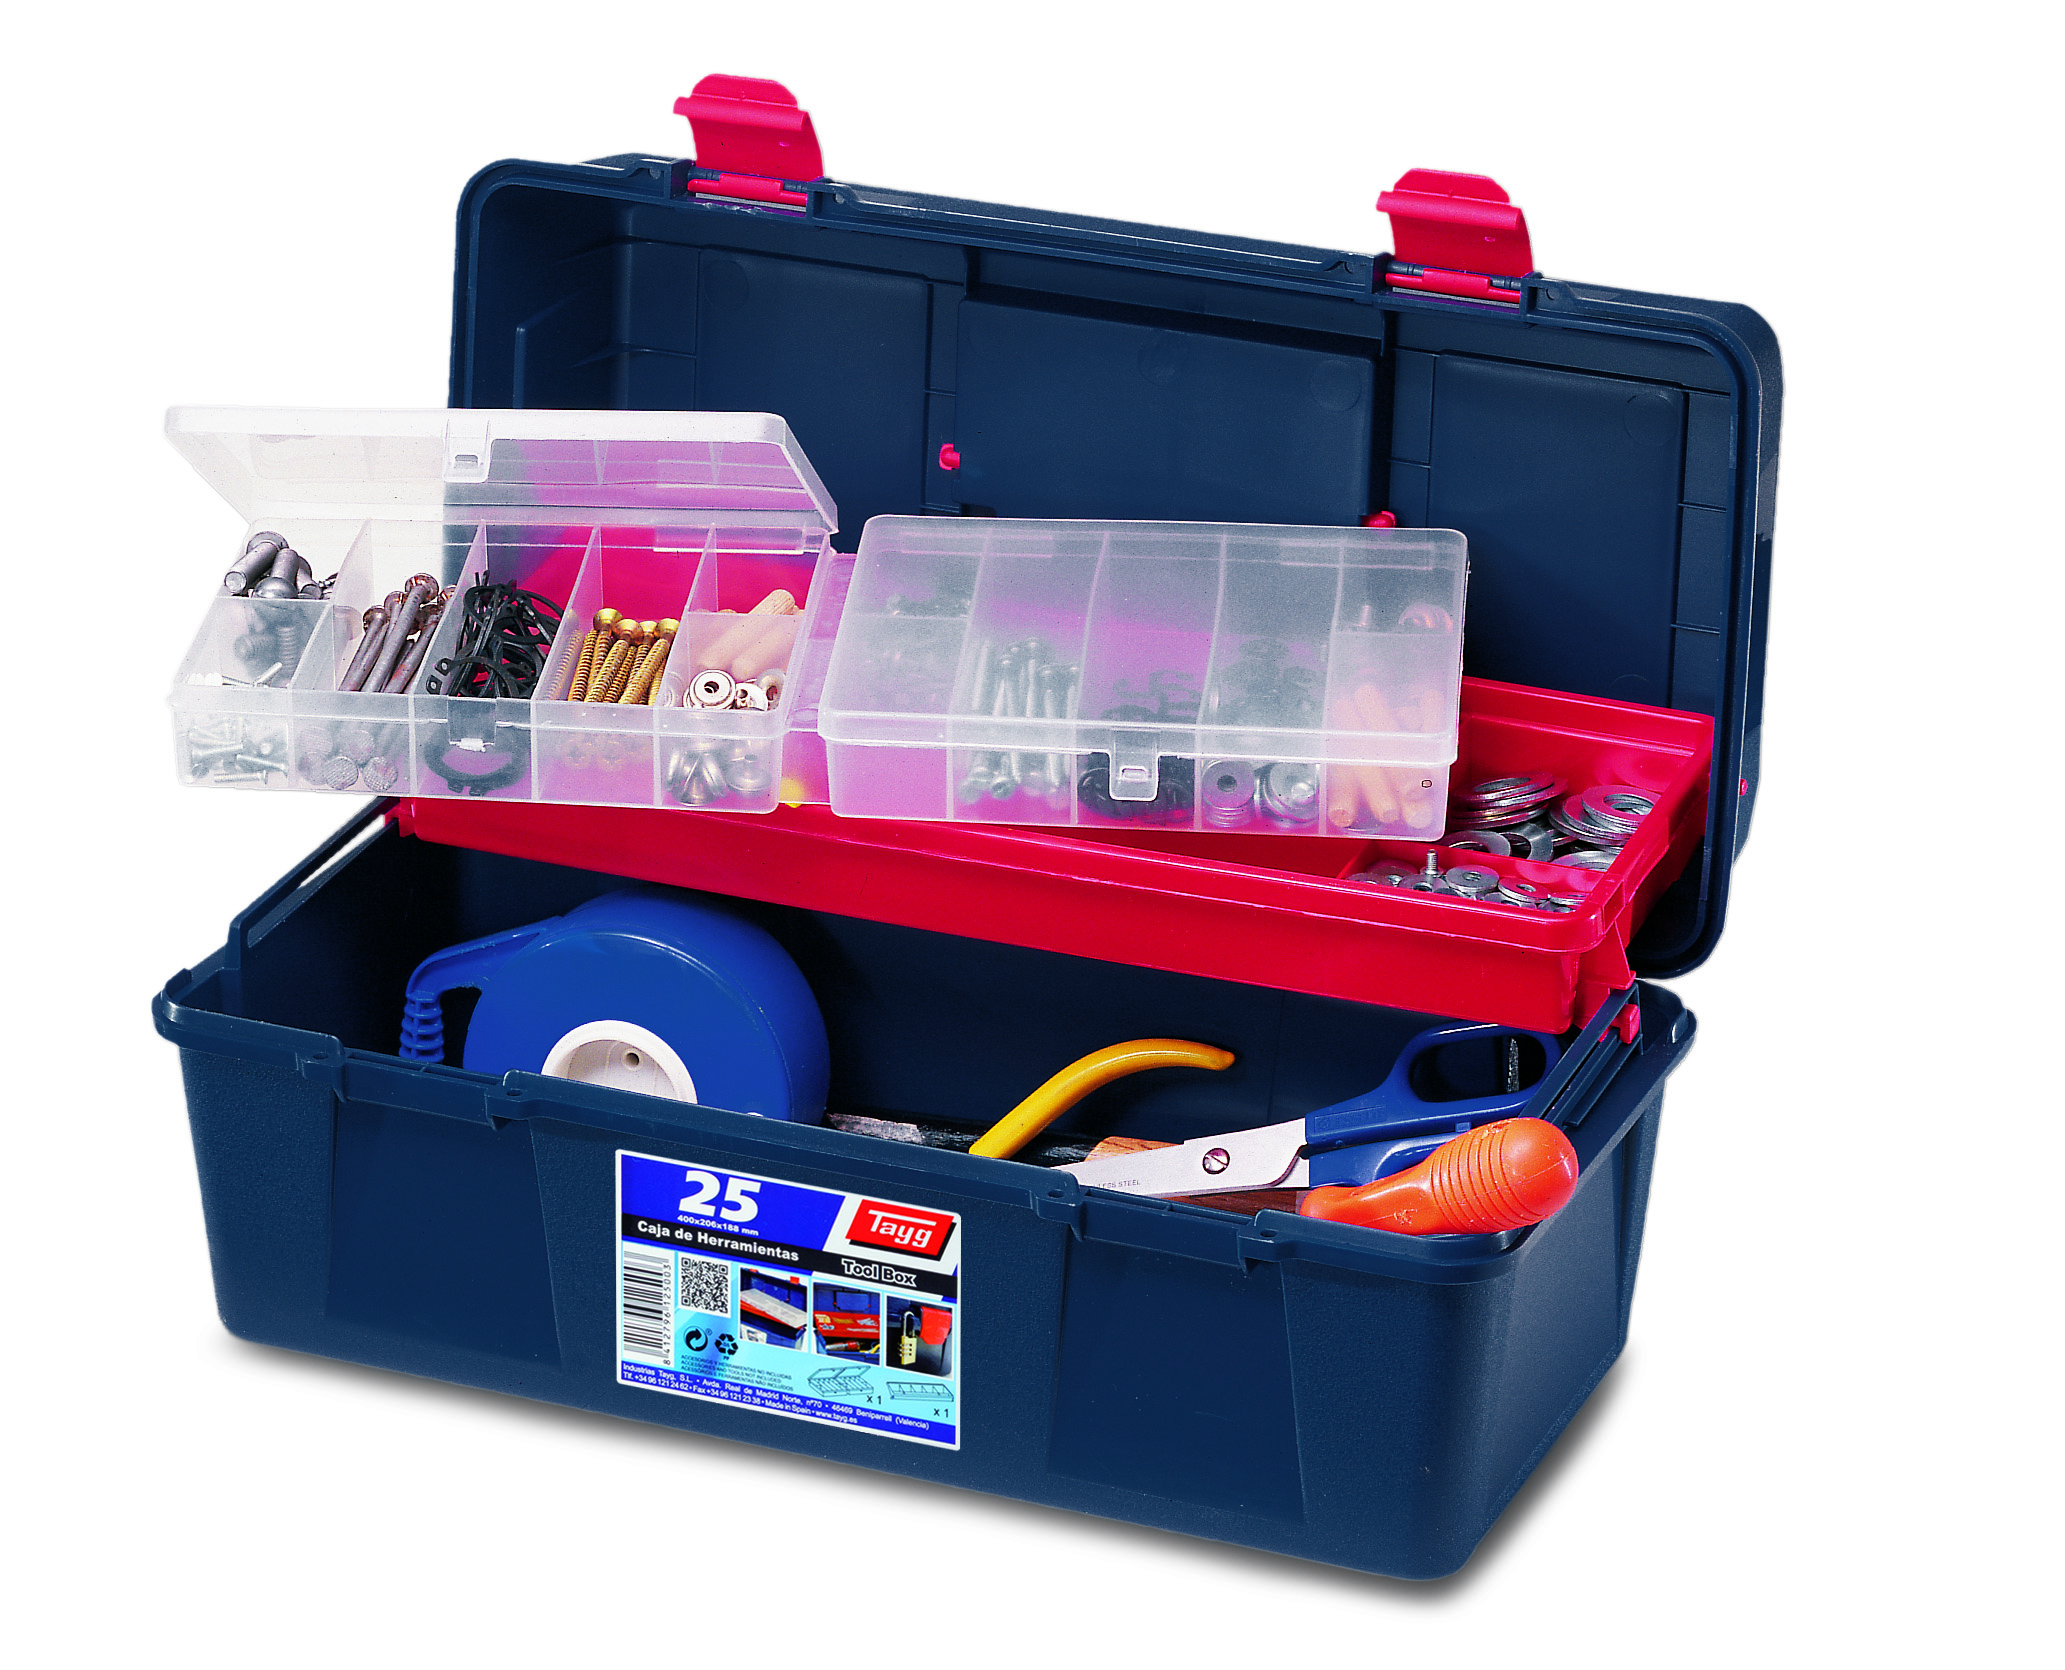 Ящик пластиковый для инструментов Tayg Box 25 Caja htas, с 2 органайзерами, 40х20,6х18,8 см, синий (125003) - фото 3